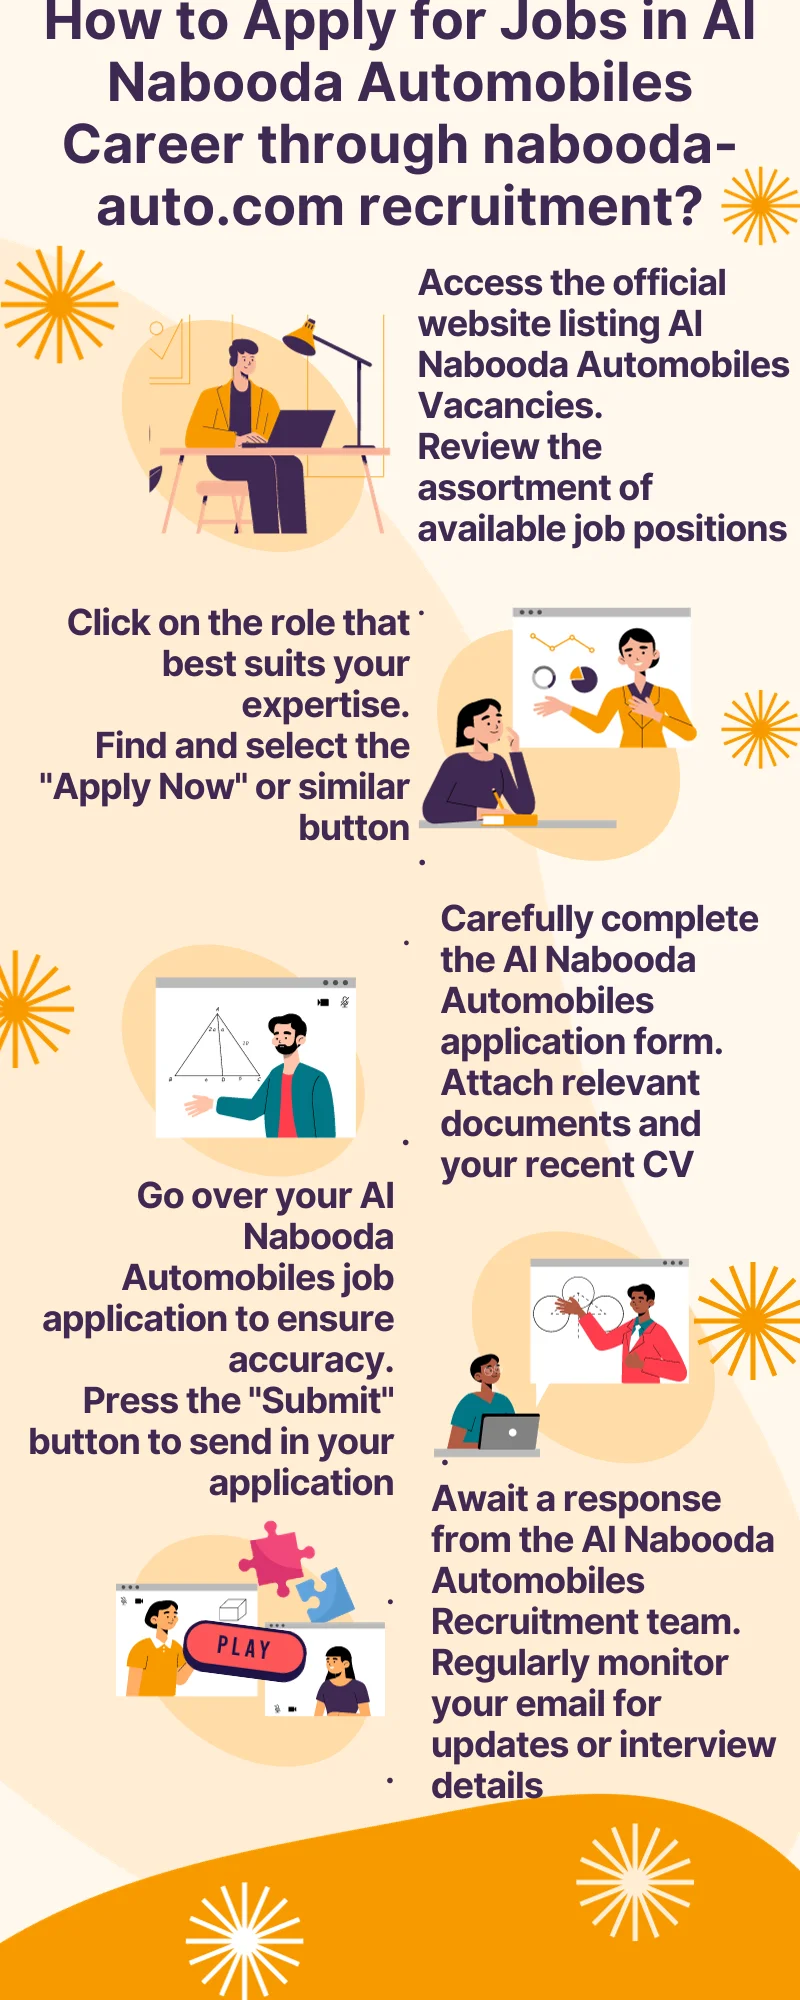 How to Apply for Jobs in Al Nabooda Automobiles Career through nabooda-auto.com recruitment?